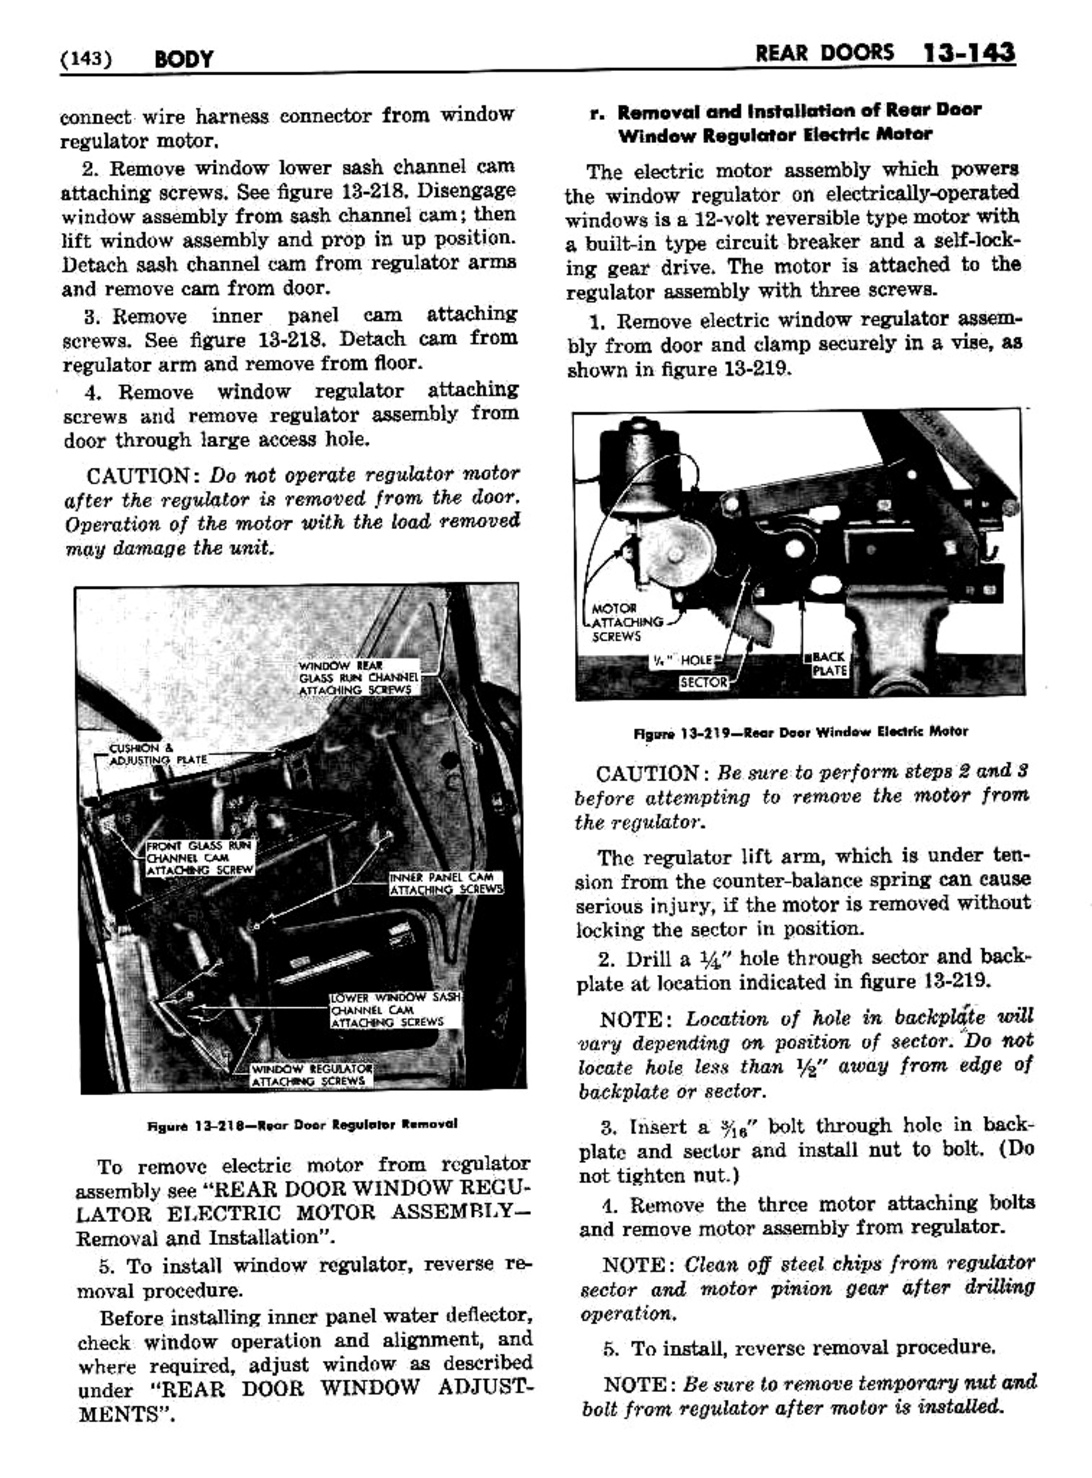 n_1957 Buick Body Service Manual-145-145.jpg